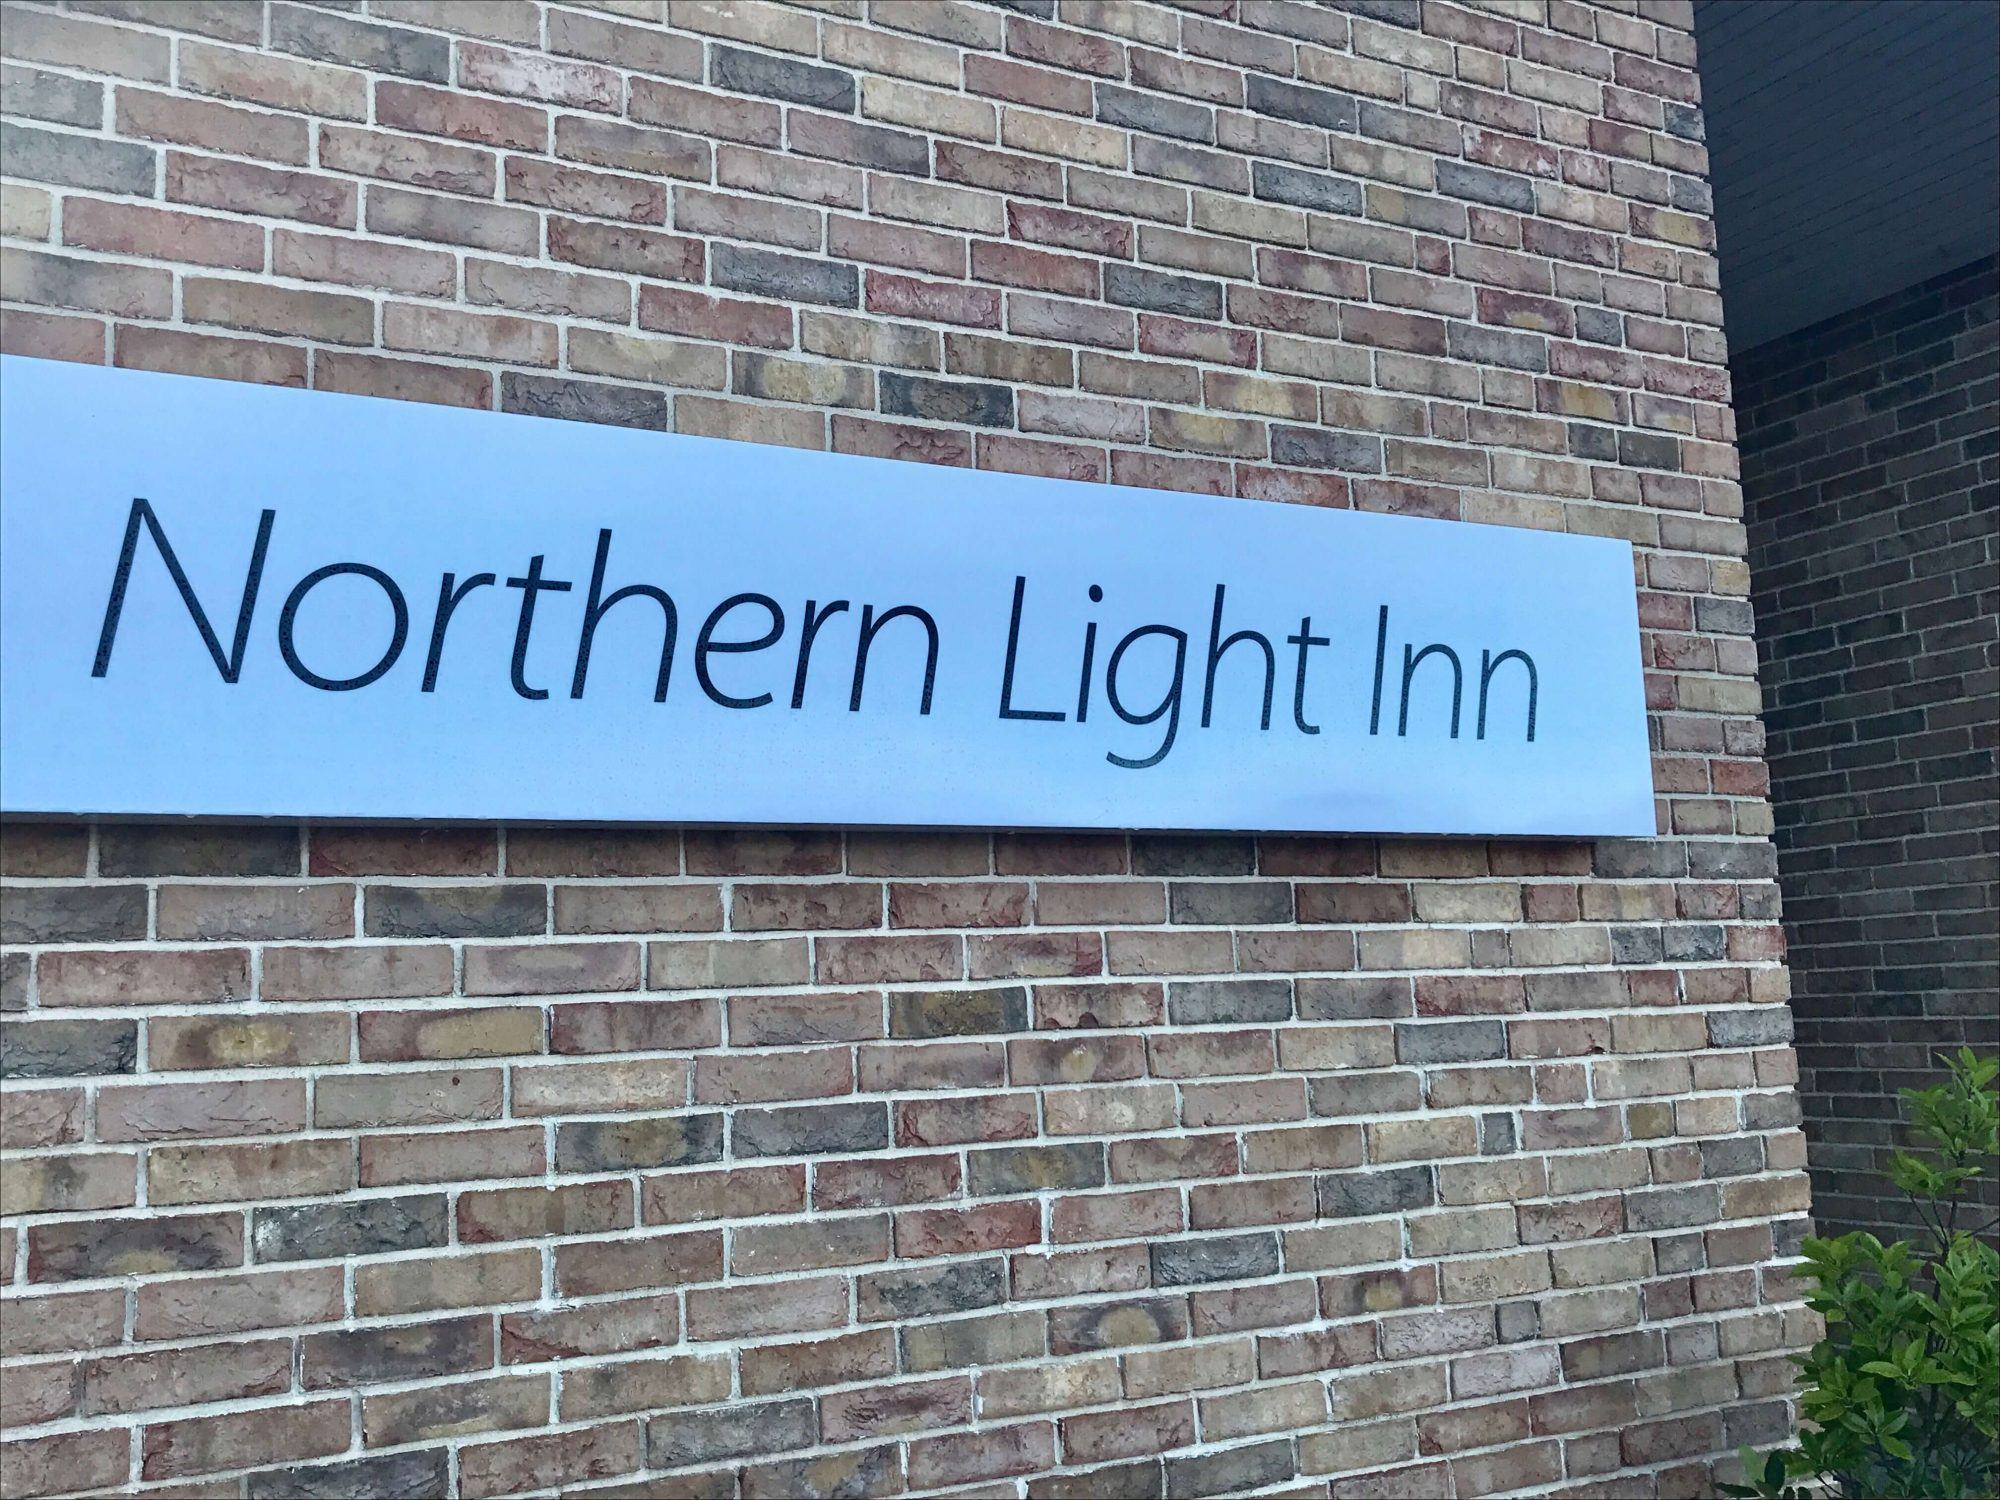 Northern Light Inn Iceland sign